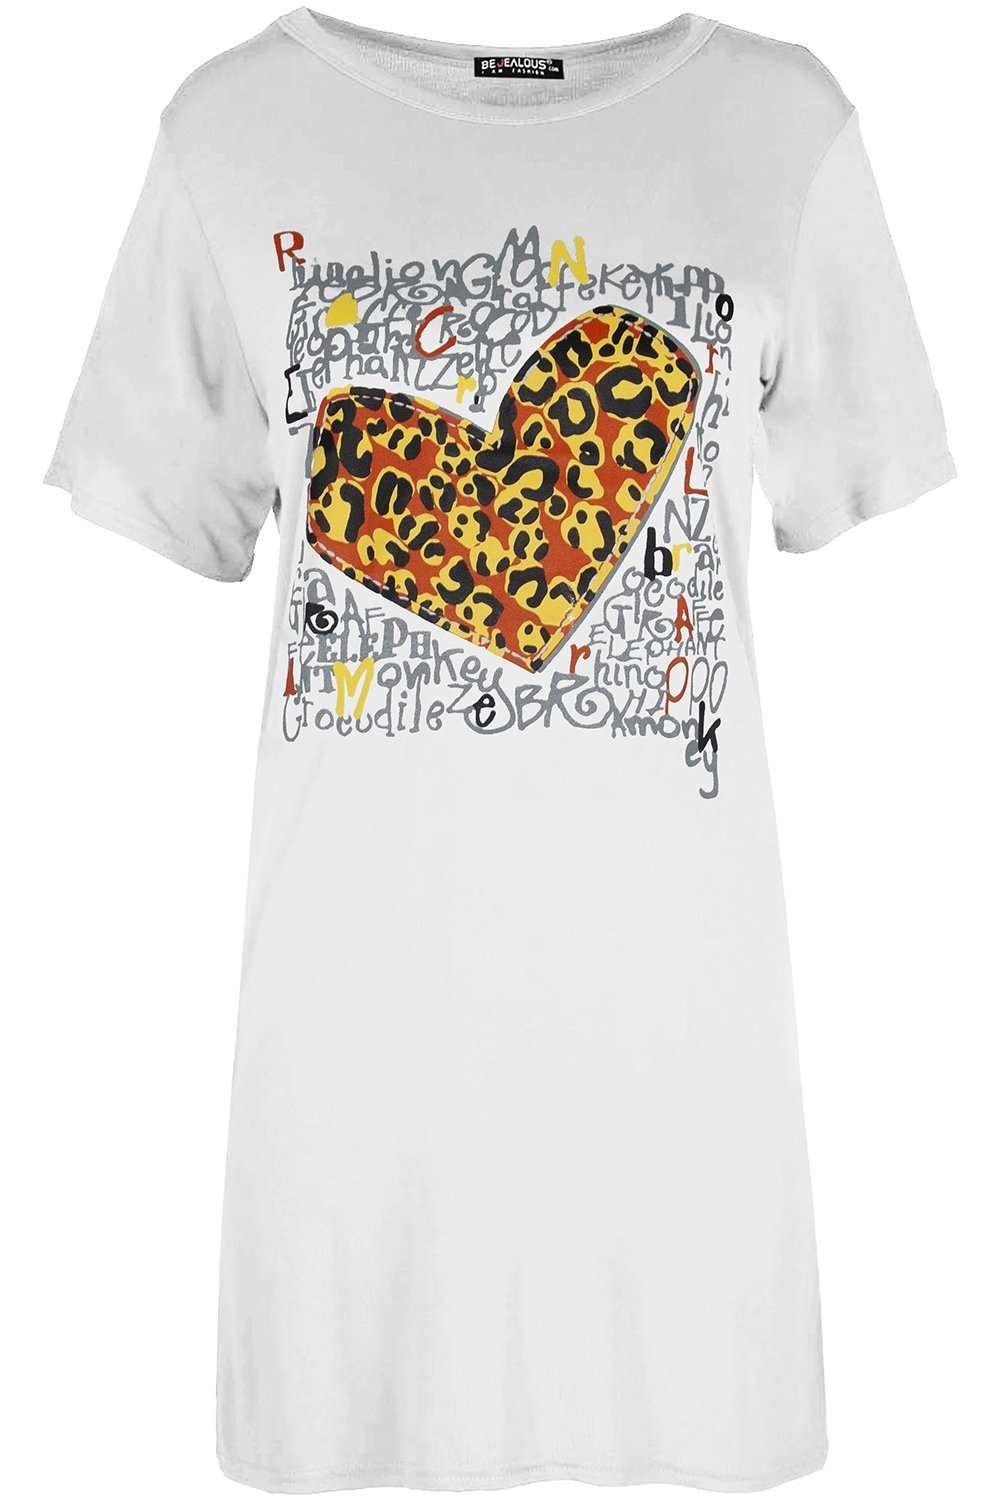 Lorna Leopard Slogan Print Tshirt Dress - bejealous-com